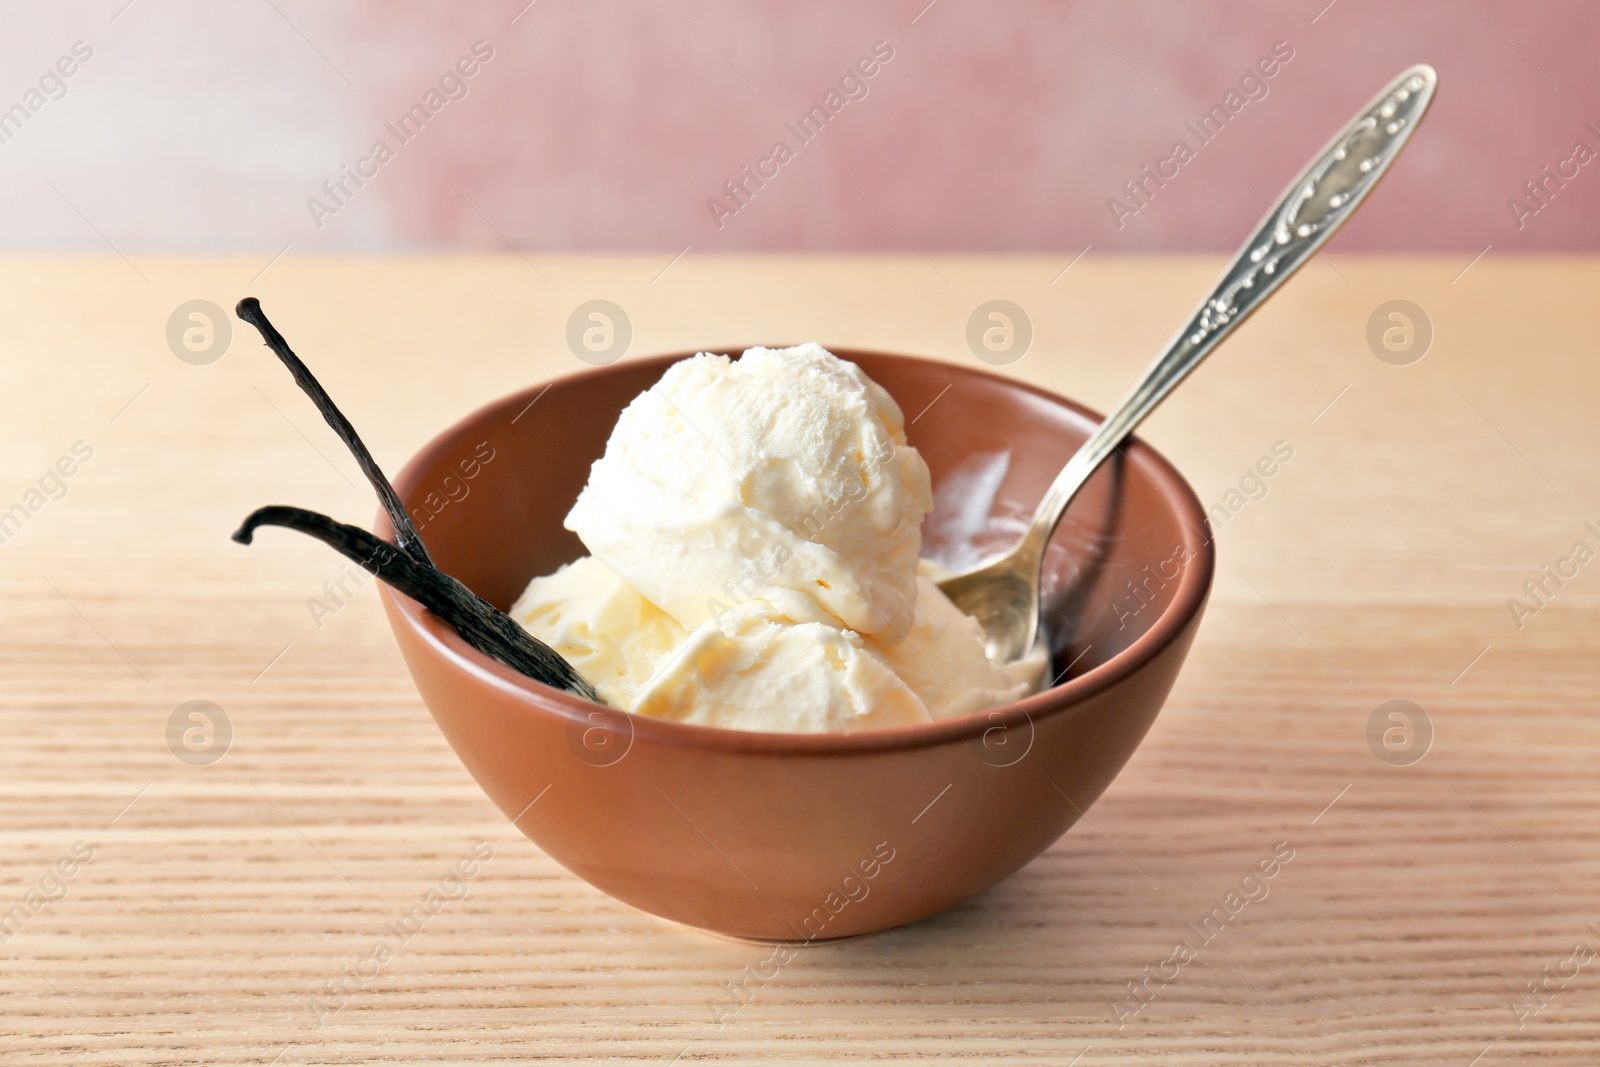 Photo of Bowl with tasty vanilla ice cream on wooden table